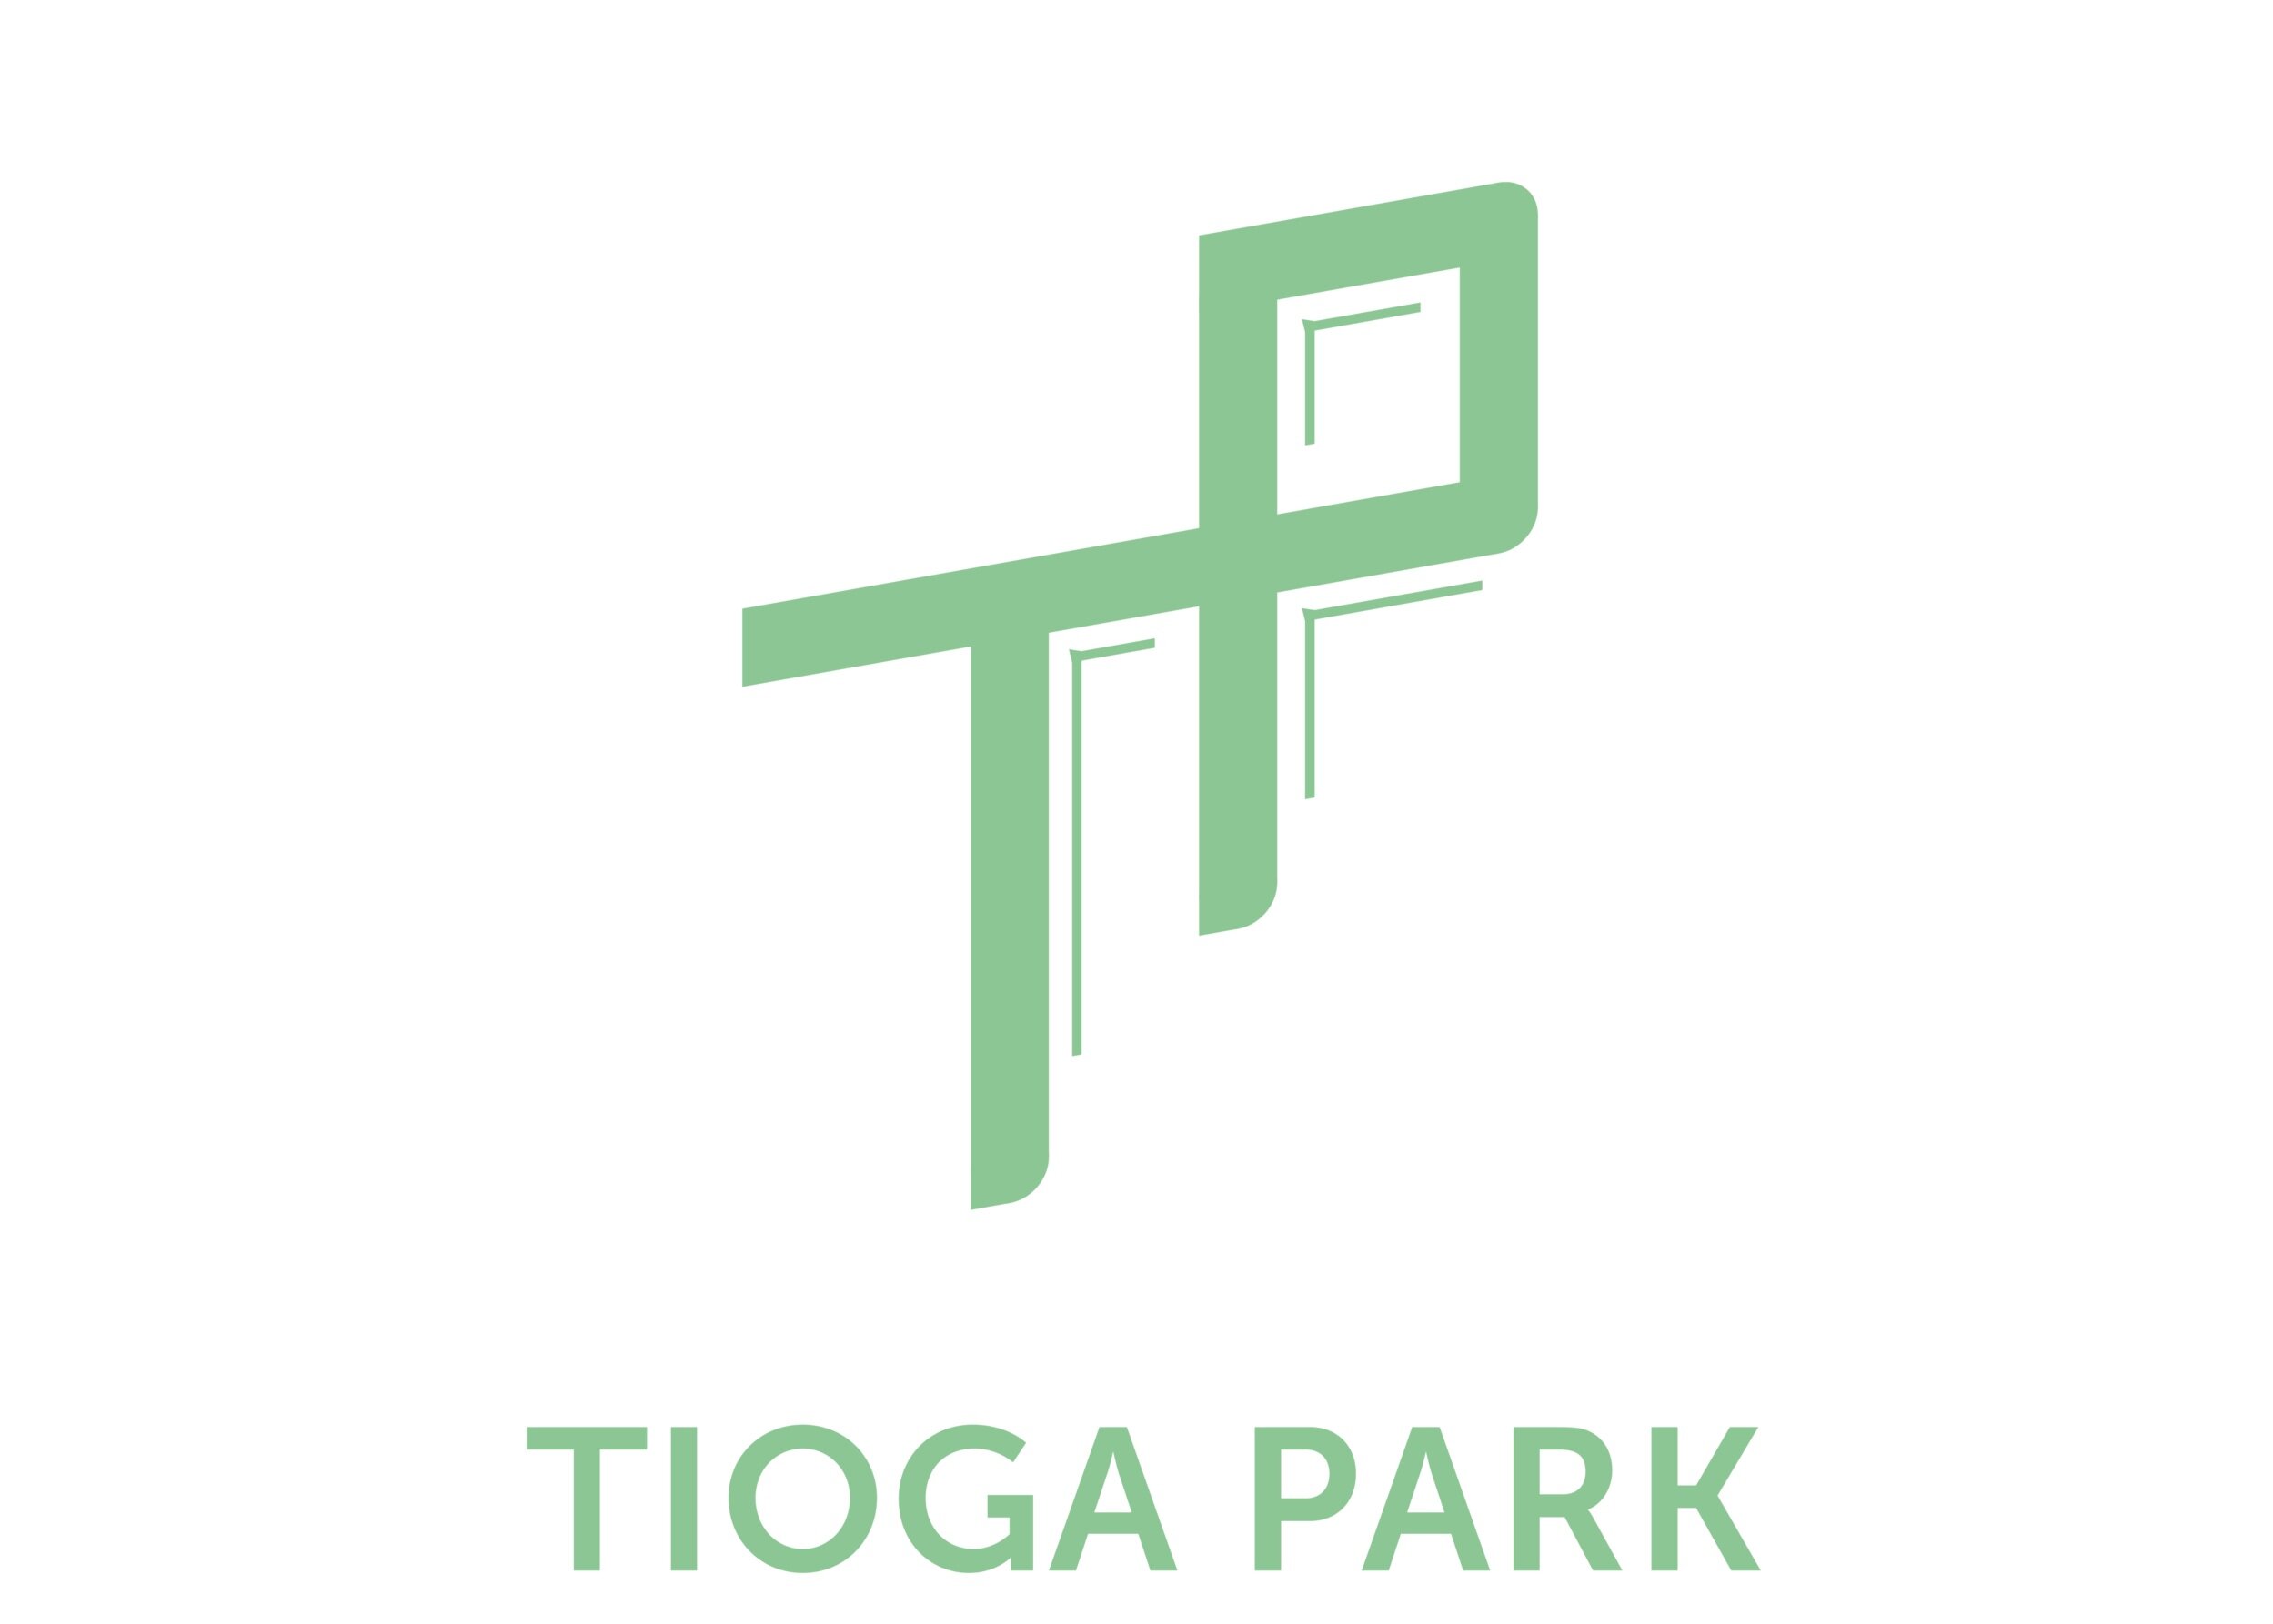 Tioga Park Development Group 